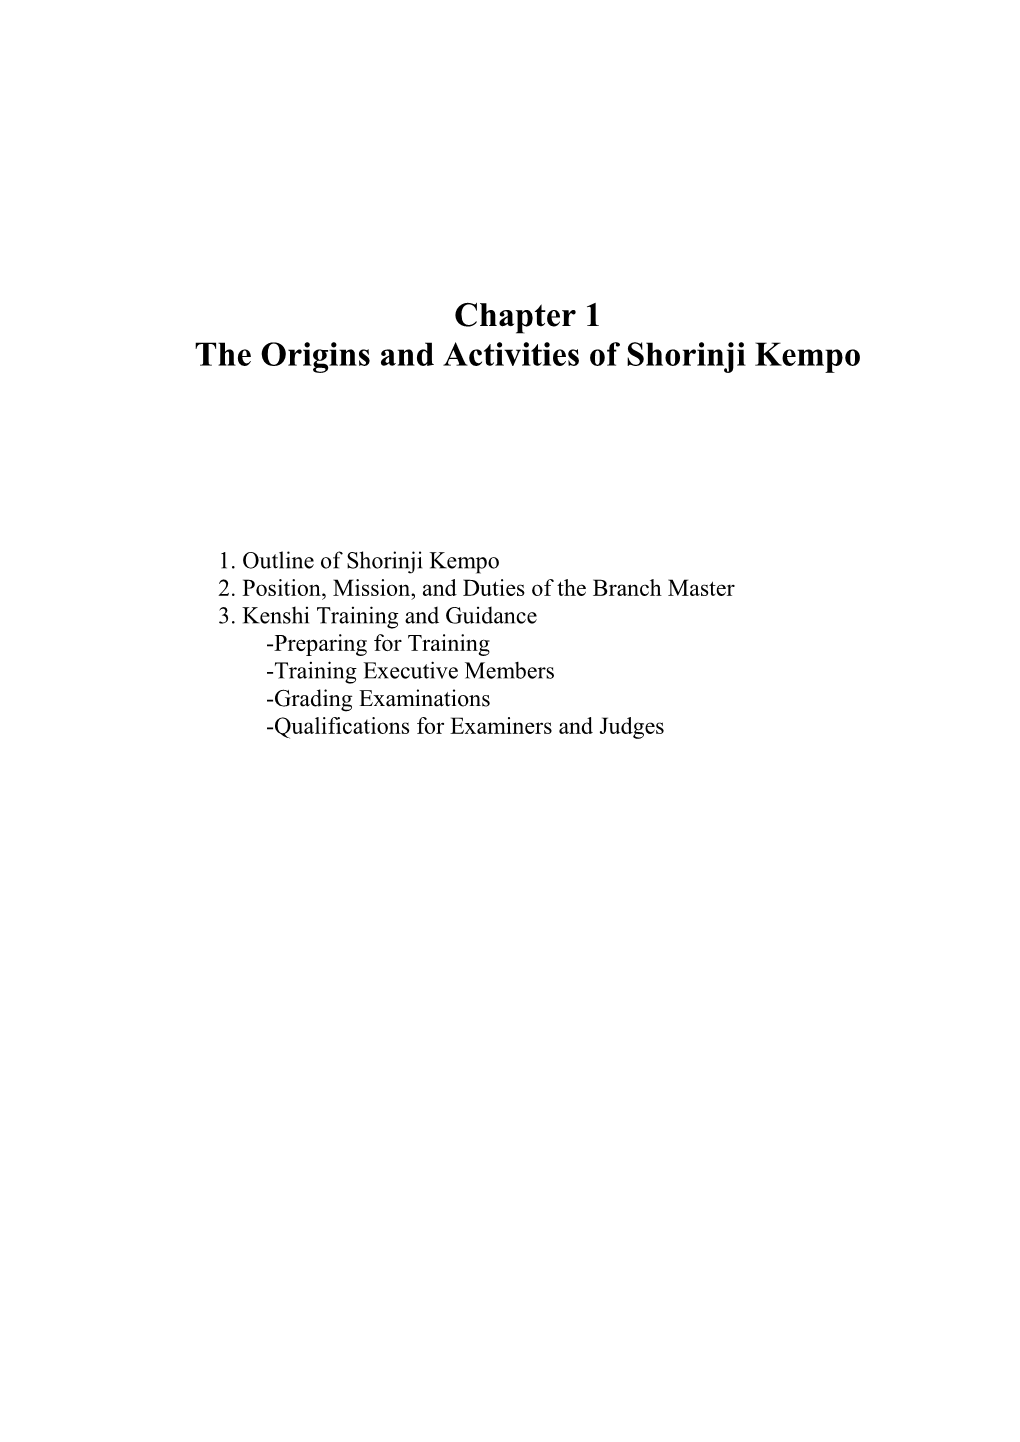 Chapter 1 the Origins and Activities of Shorinji Kempo